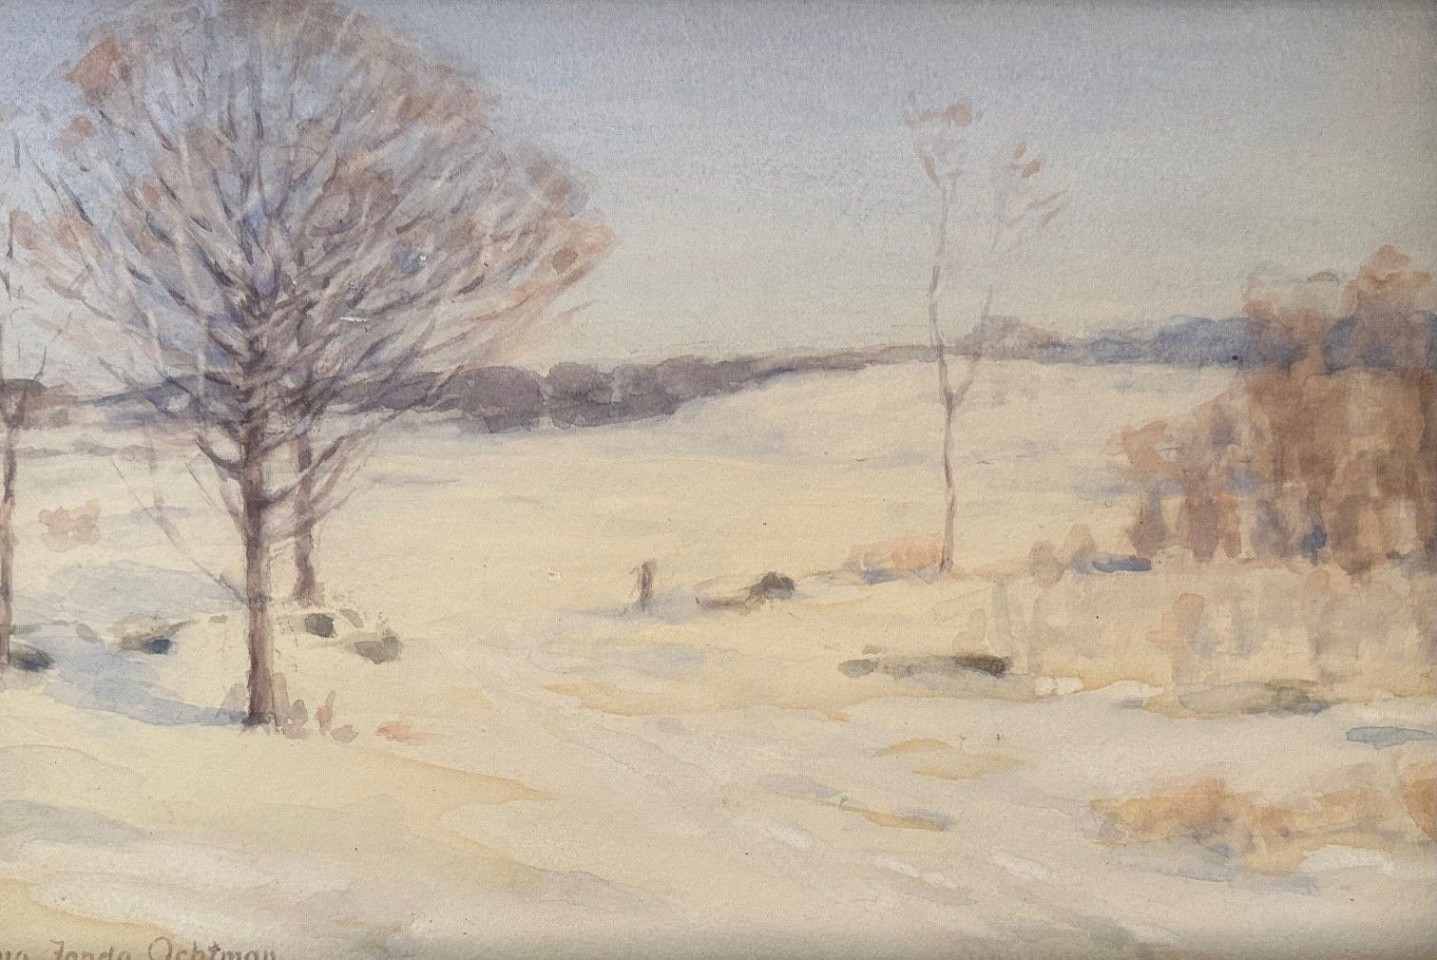 Mina Fonda Ochtman, A Bright Winter Day
watercolor on paper, 8"" x 12""
JCAC 6759
$2,200